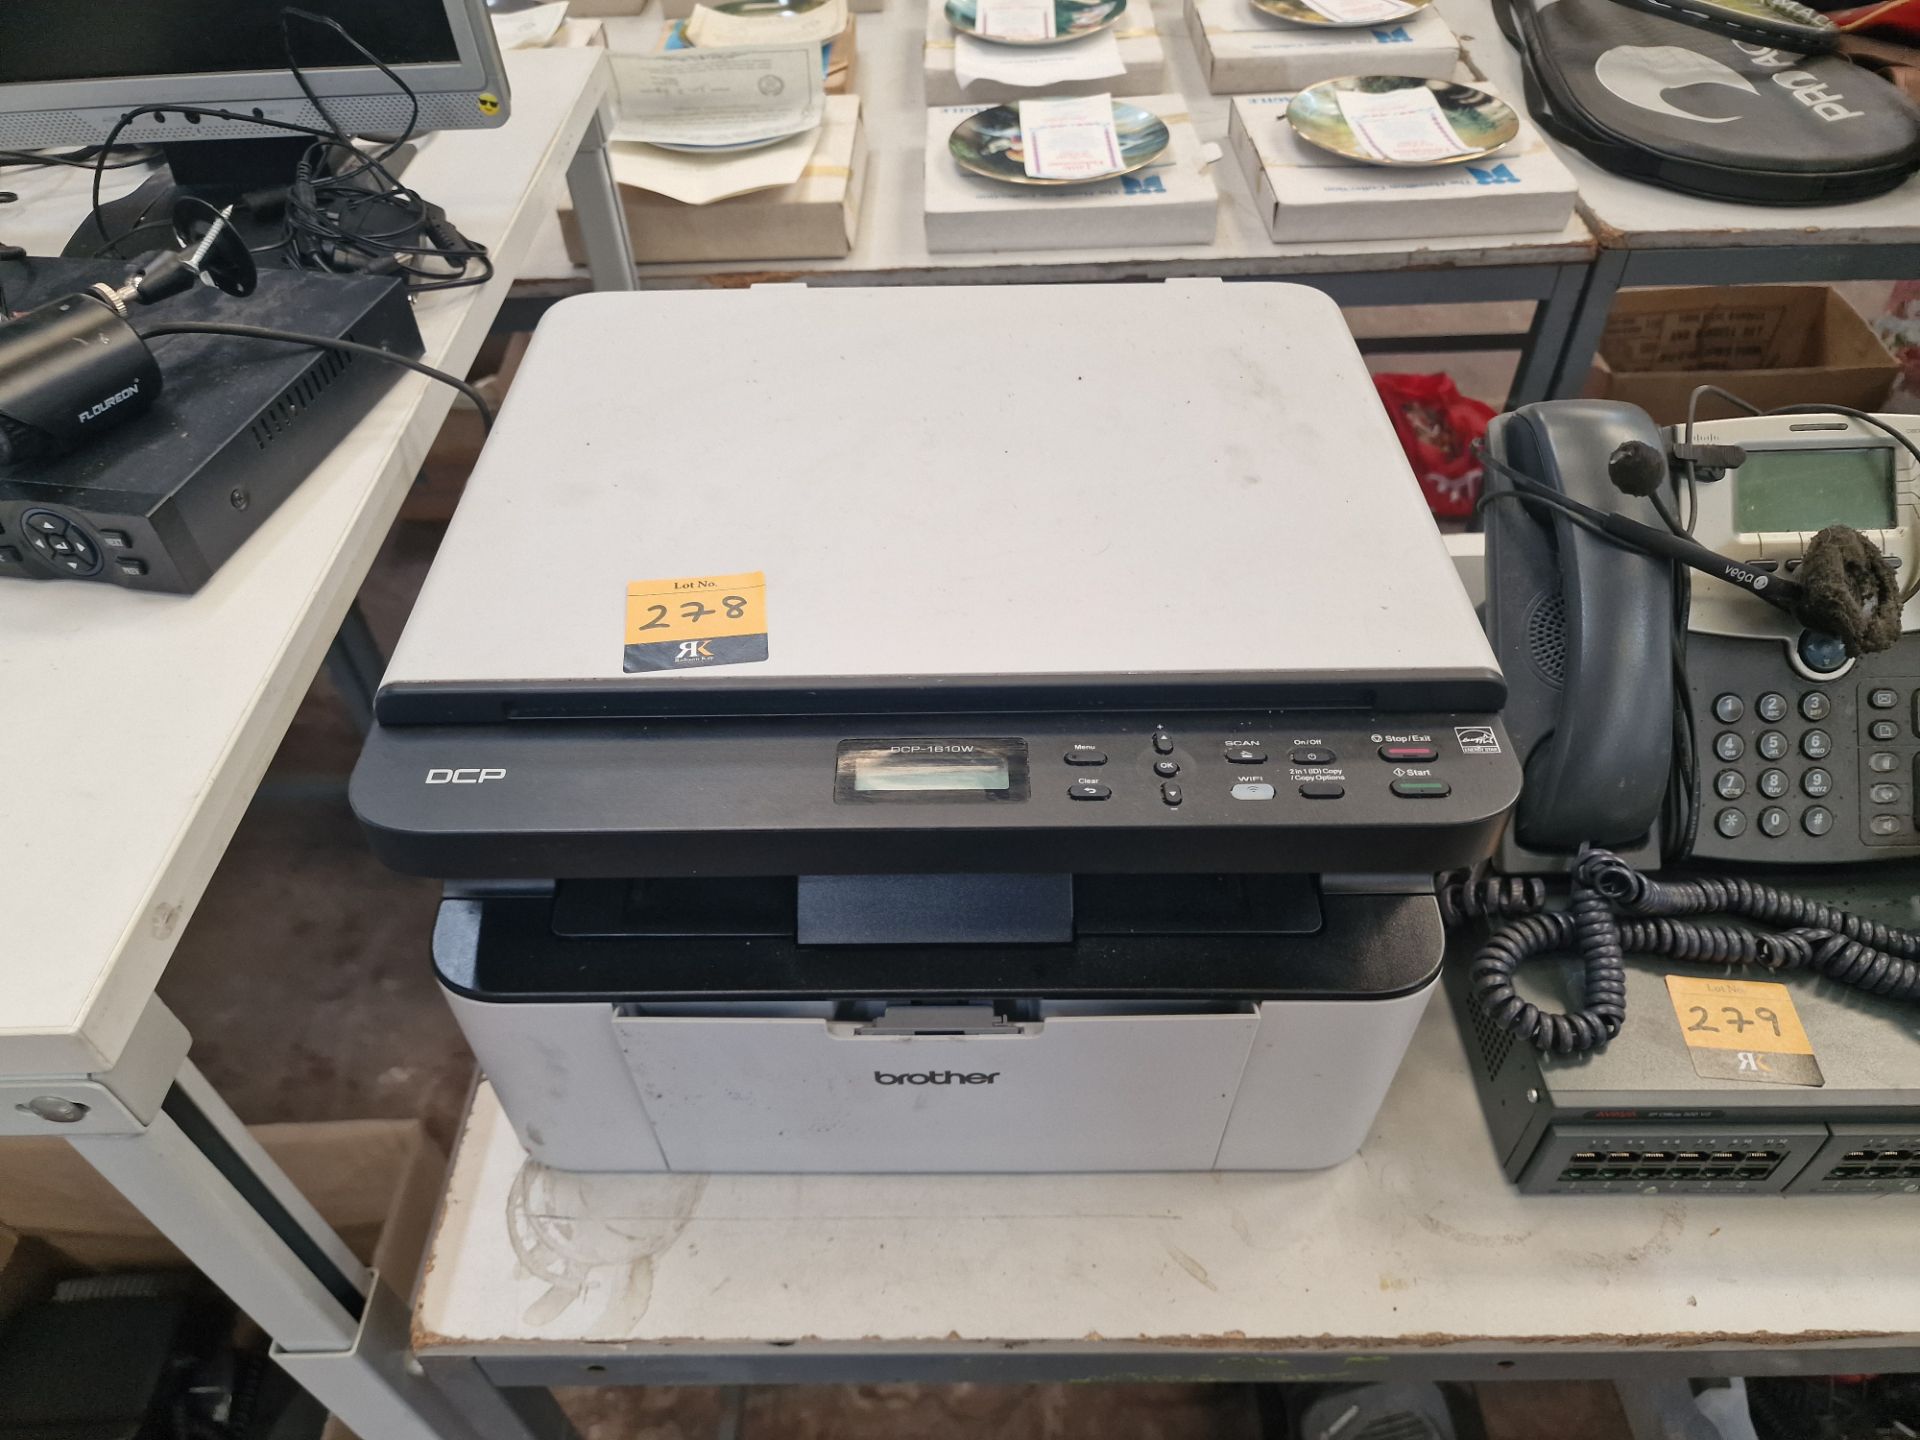 Brother DCB-1610W desktop multi function printer/scanner